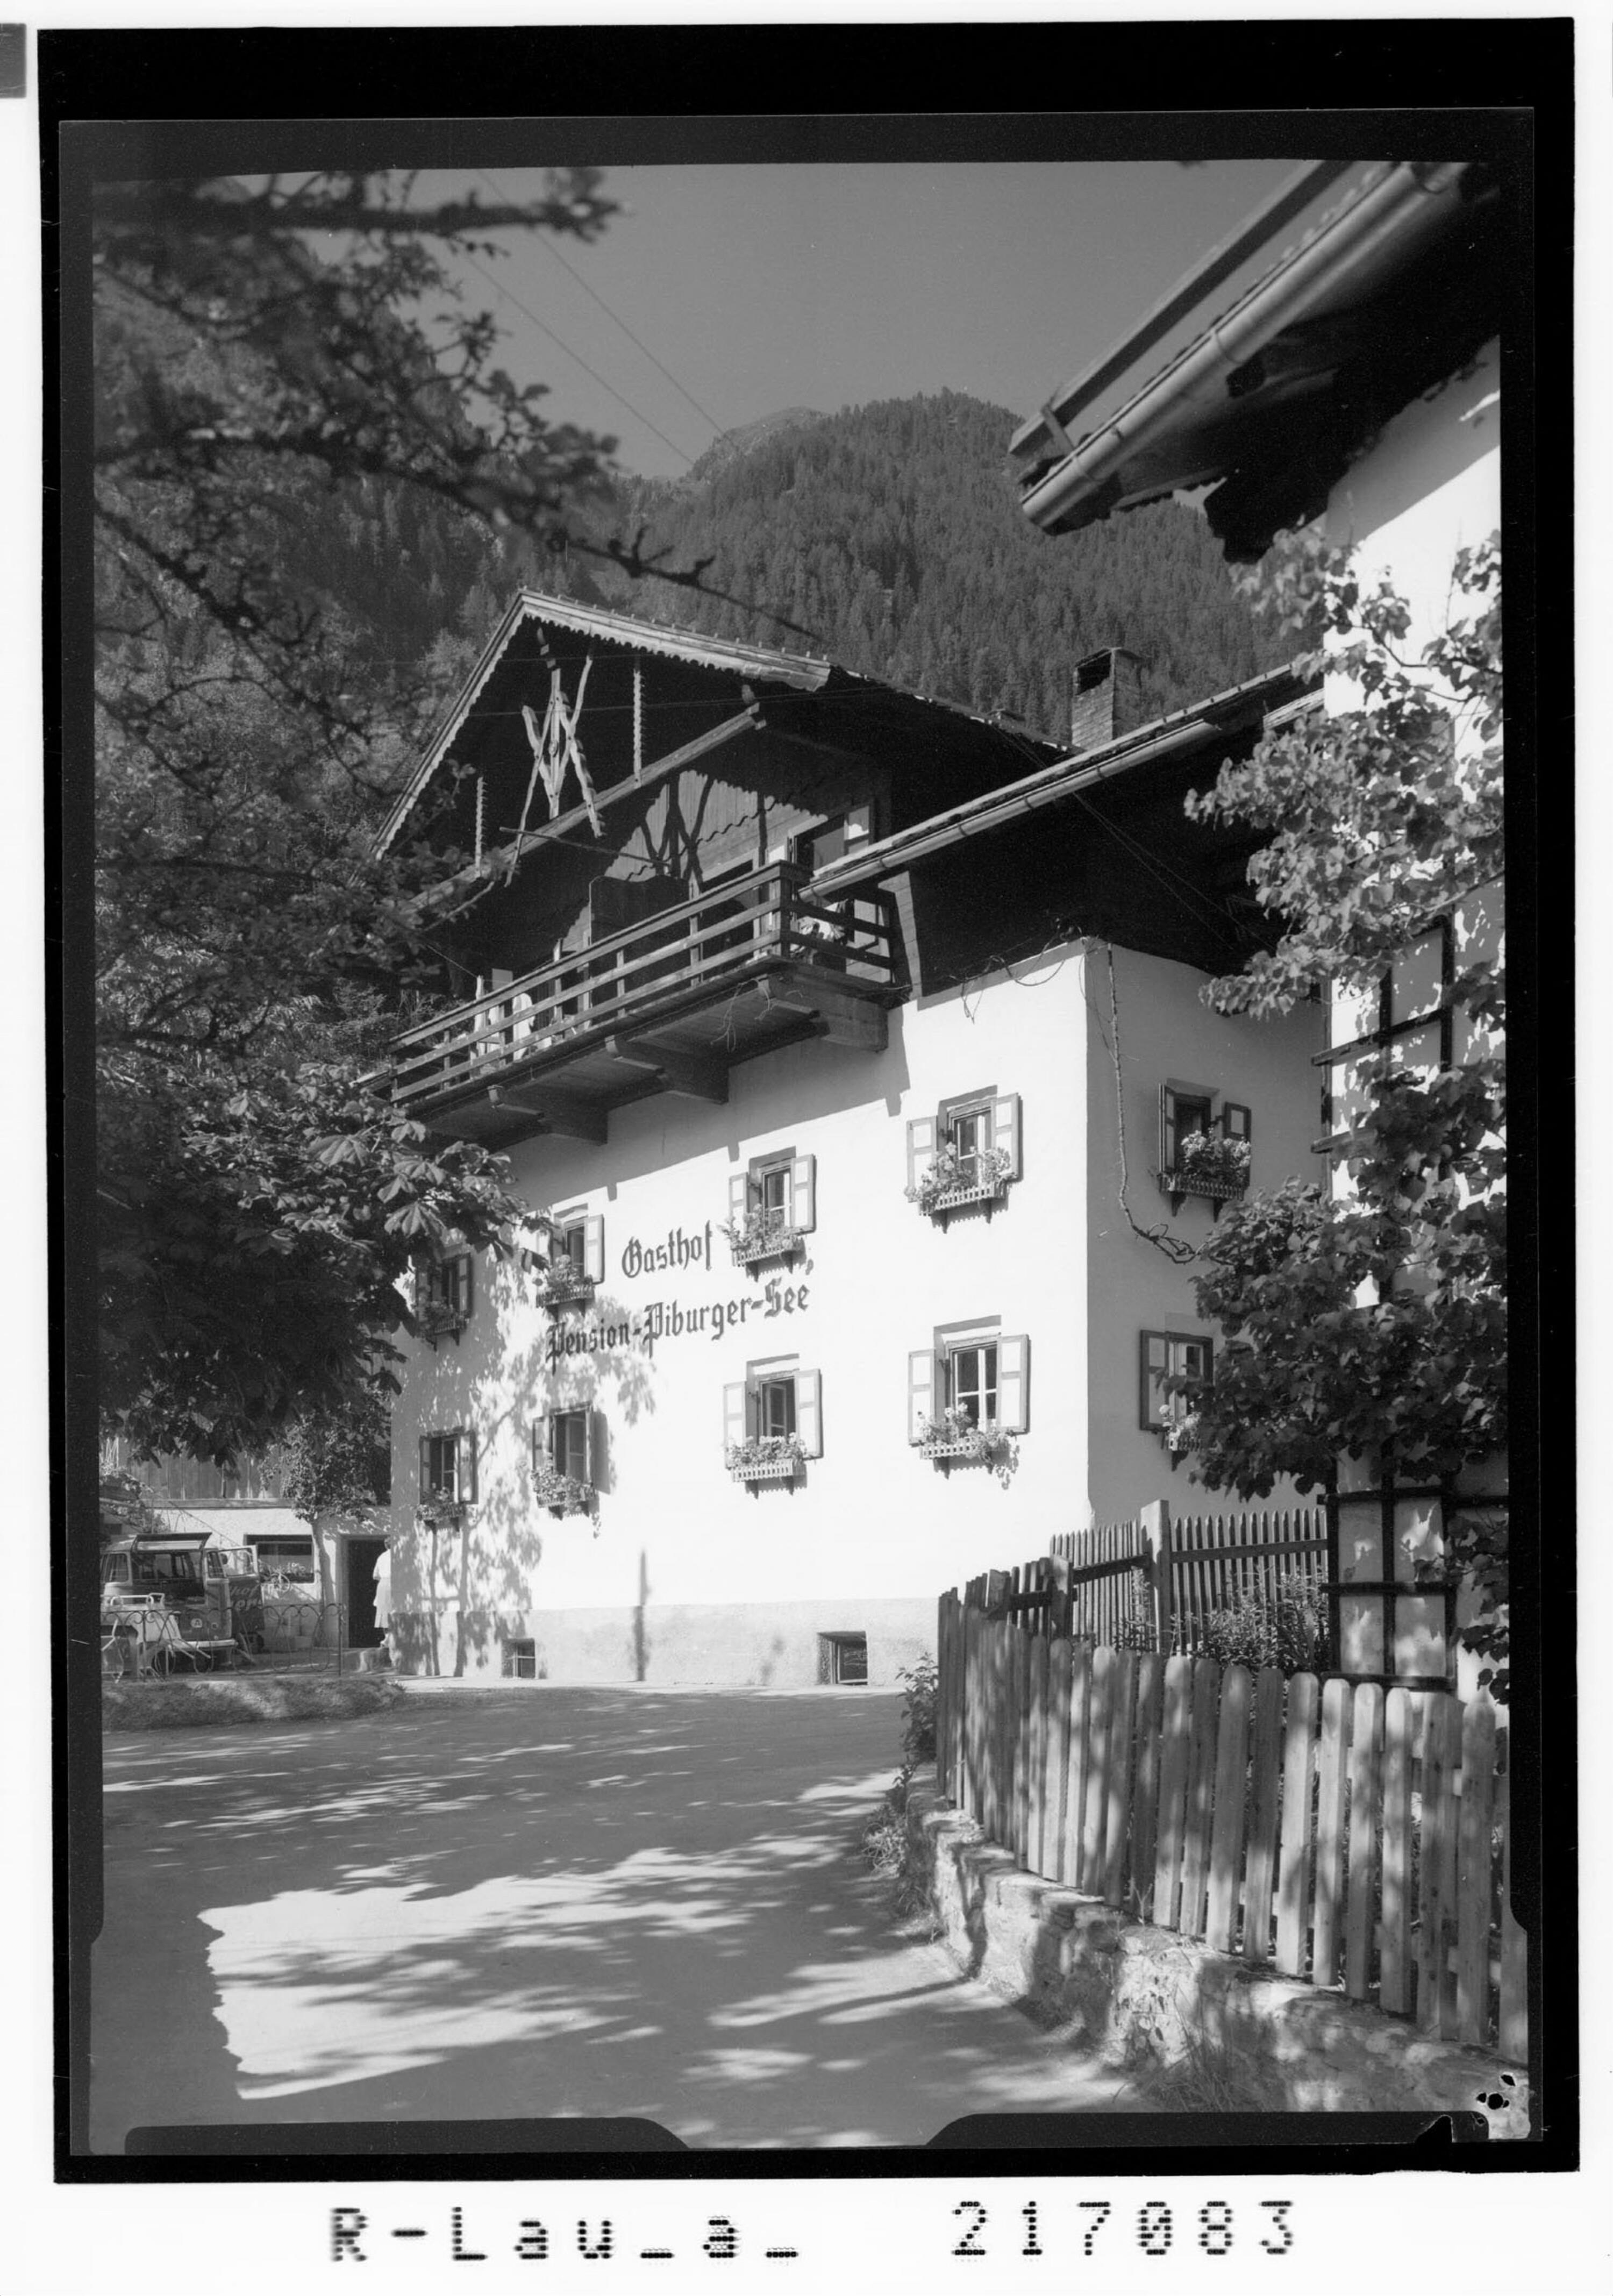 Piburg bei Ötz in Tirol / Pension Piburger See></div>


    <hr>
    <div class=